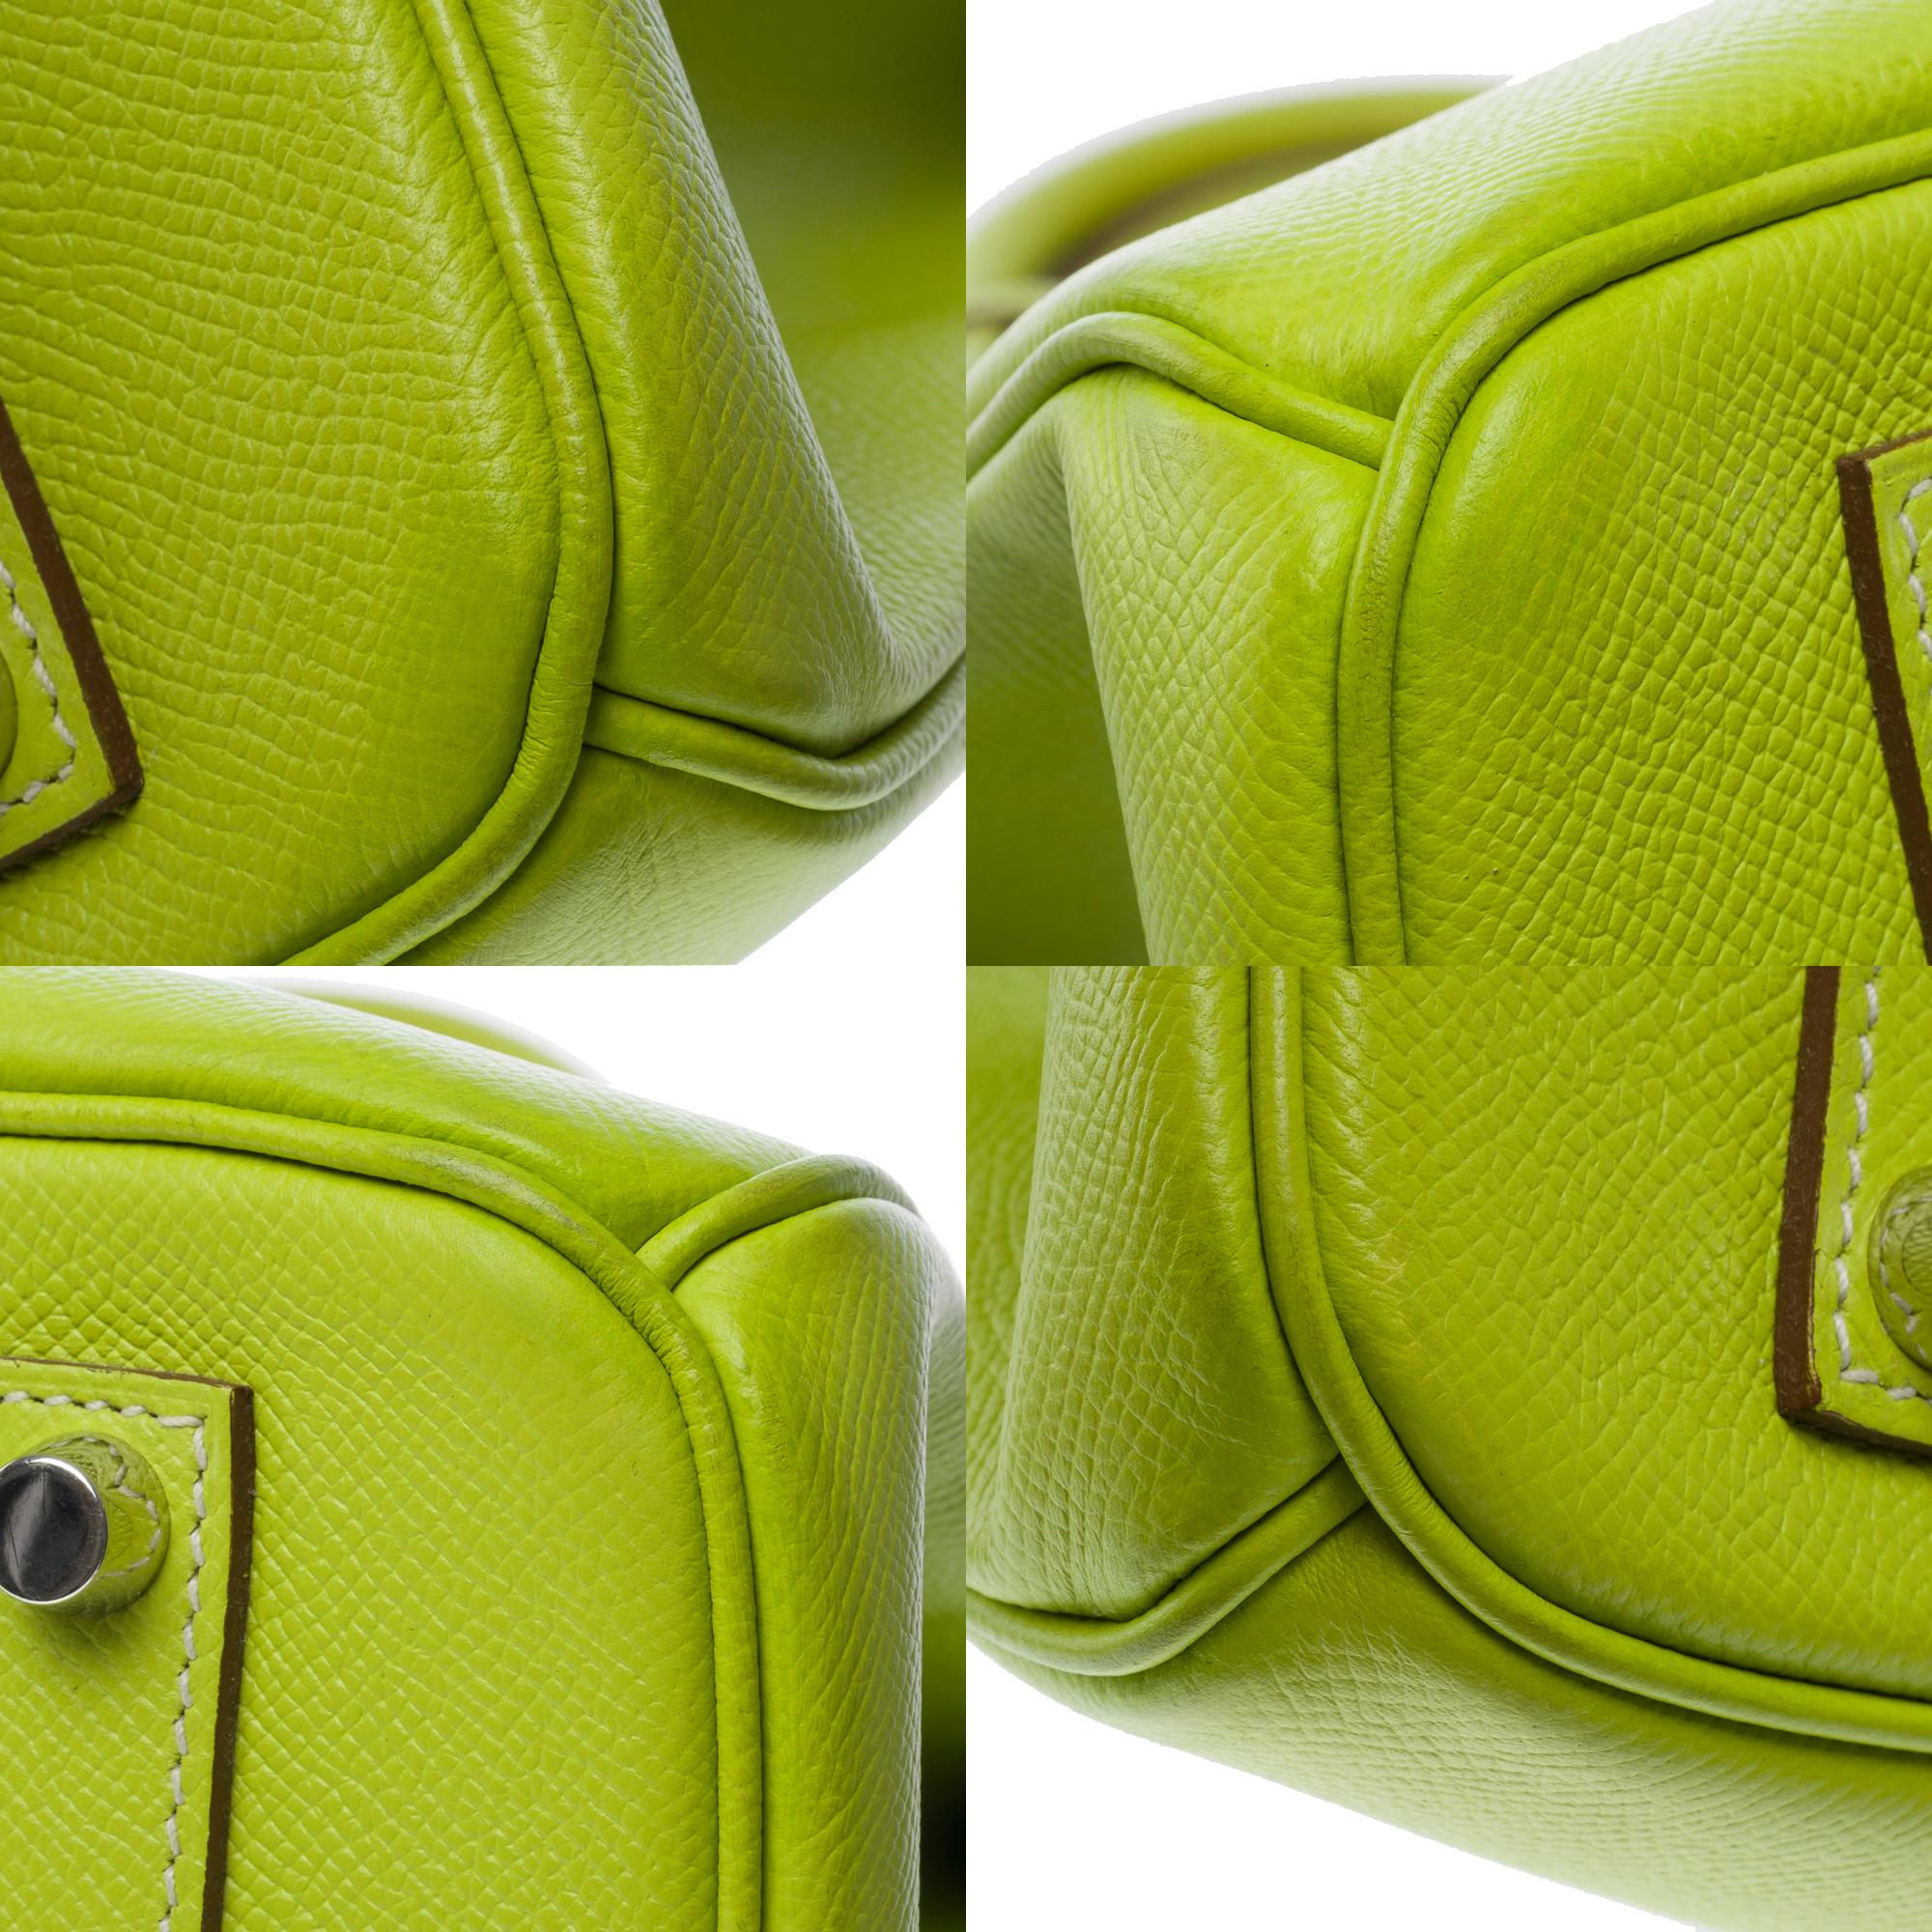 Sac à main Hermès Birkin 35 en édition limitée en cuir d'epsom vert Kiwi, SHW 8